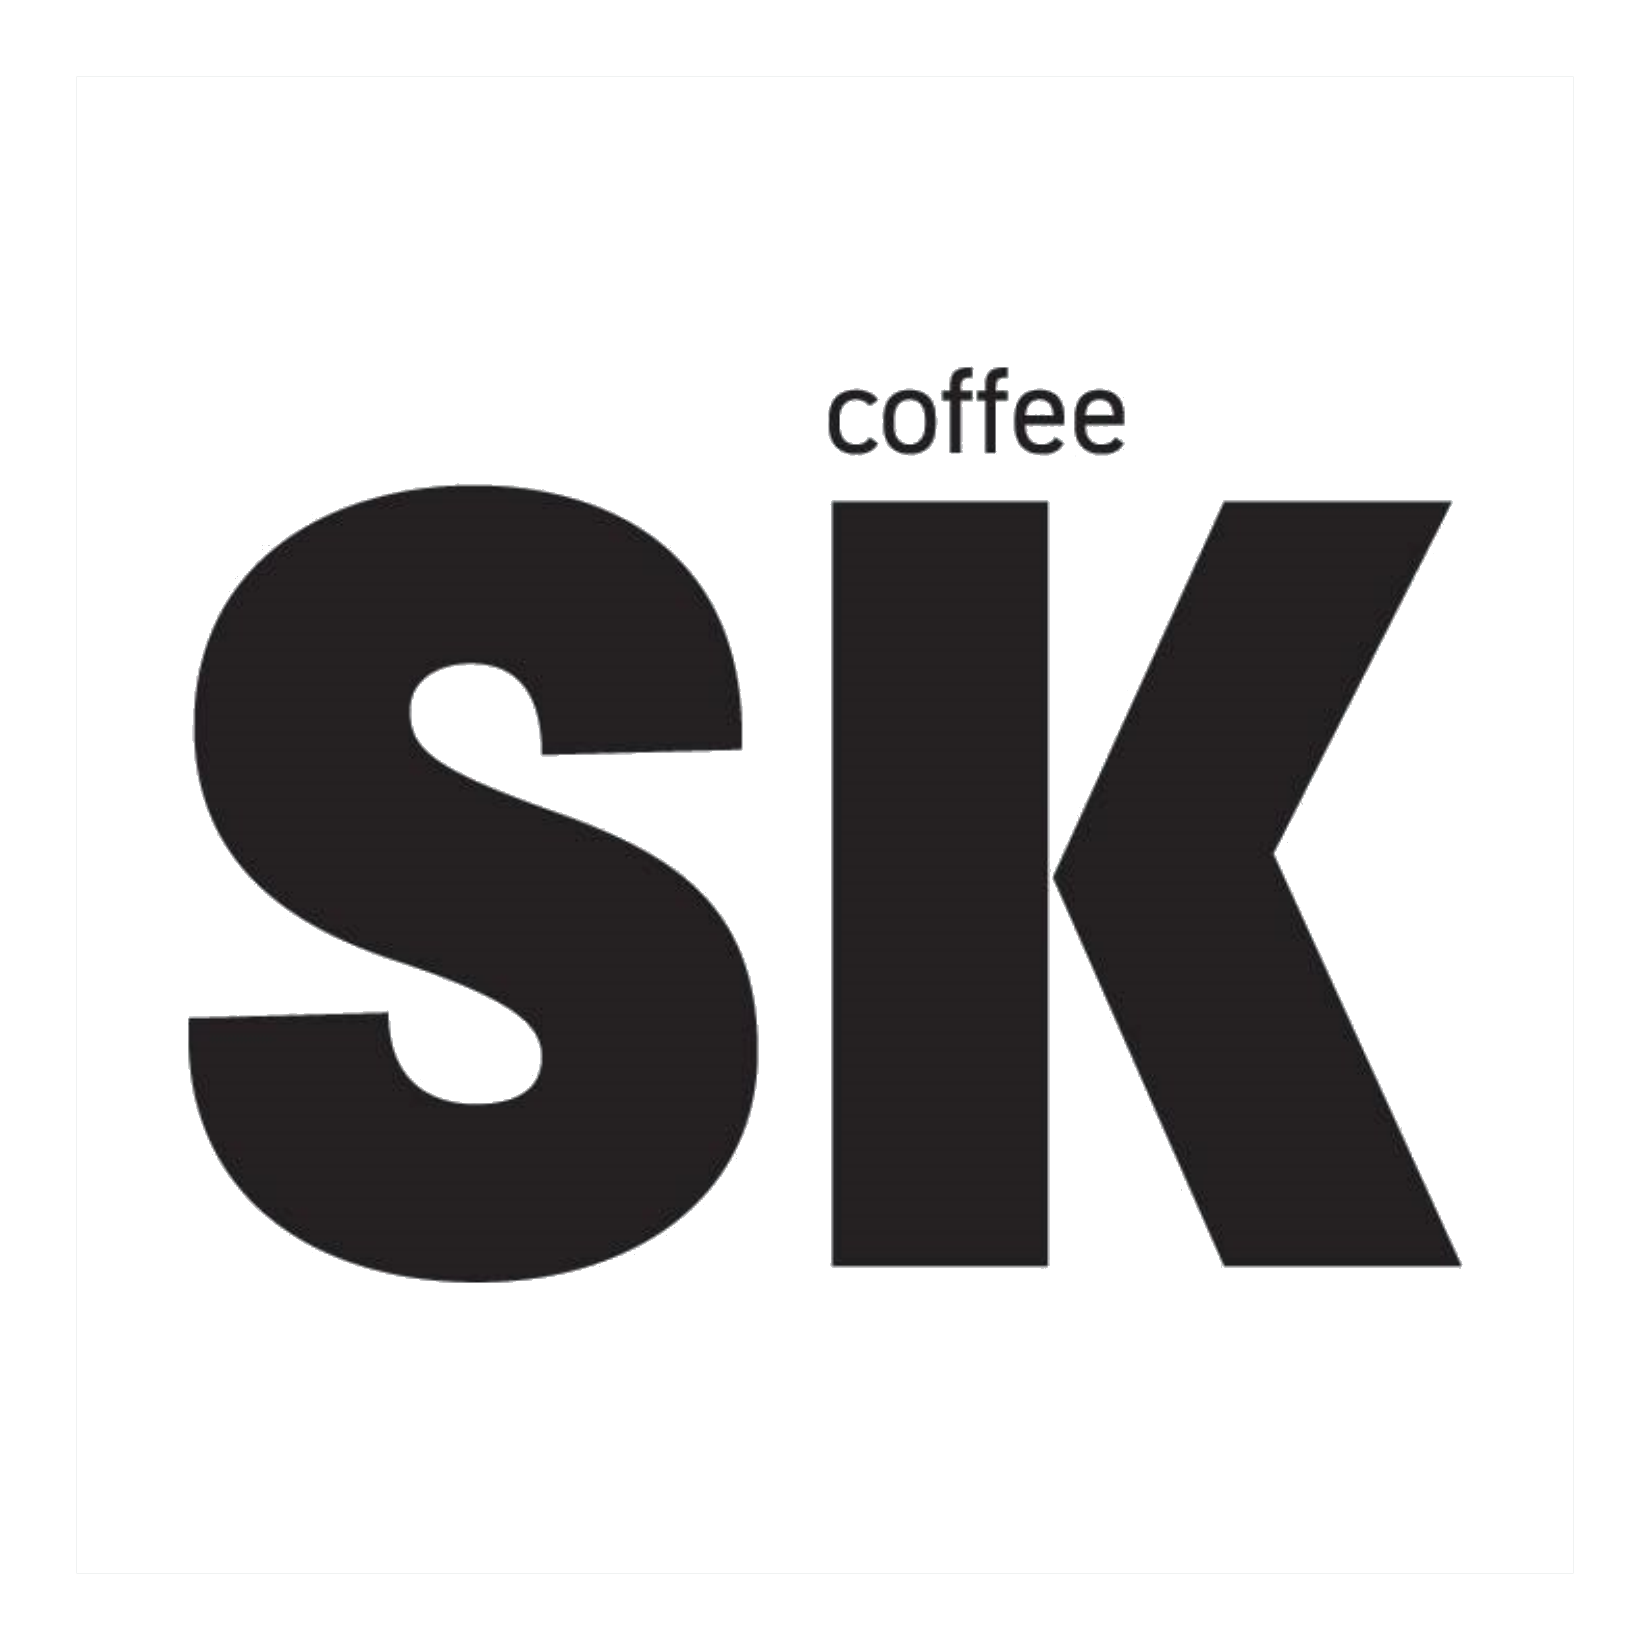 SK coffee logo Sq BW_.png